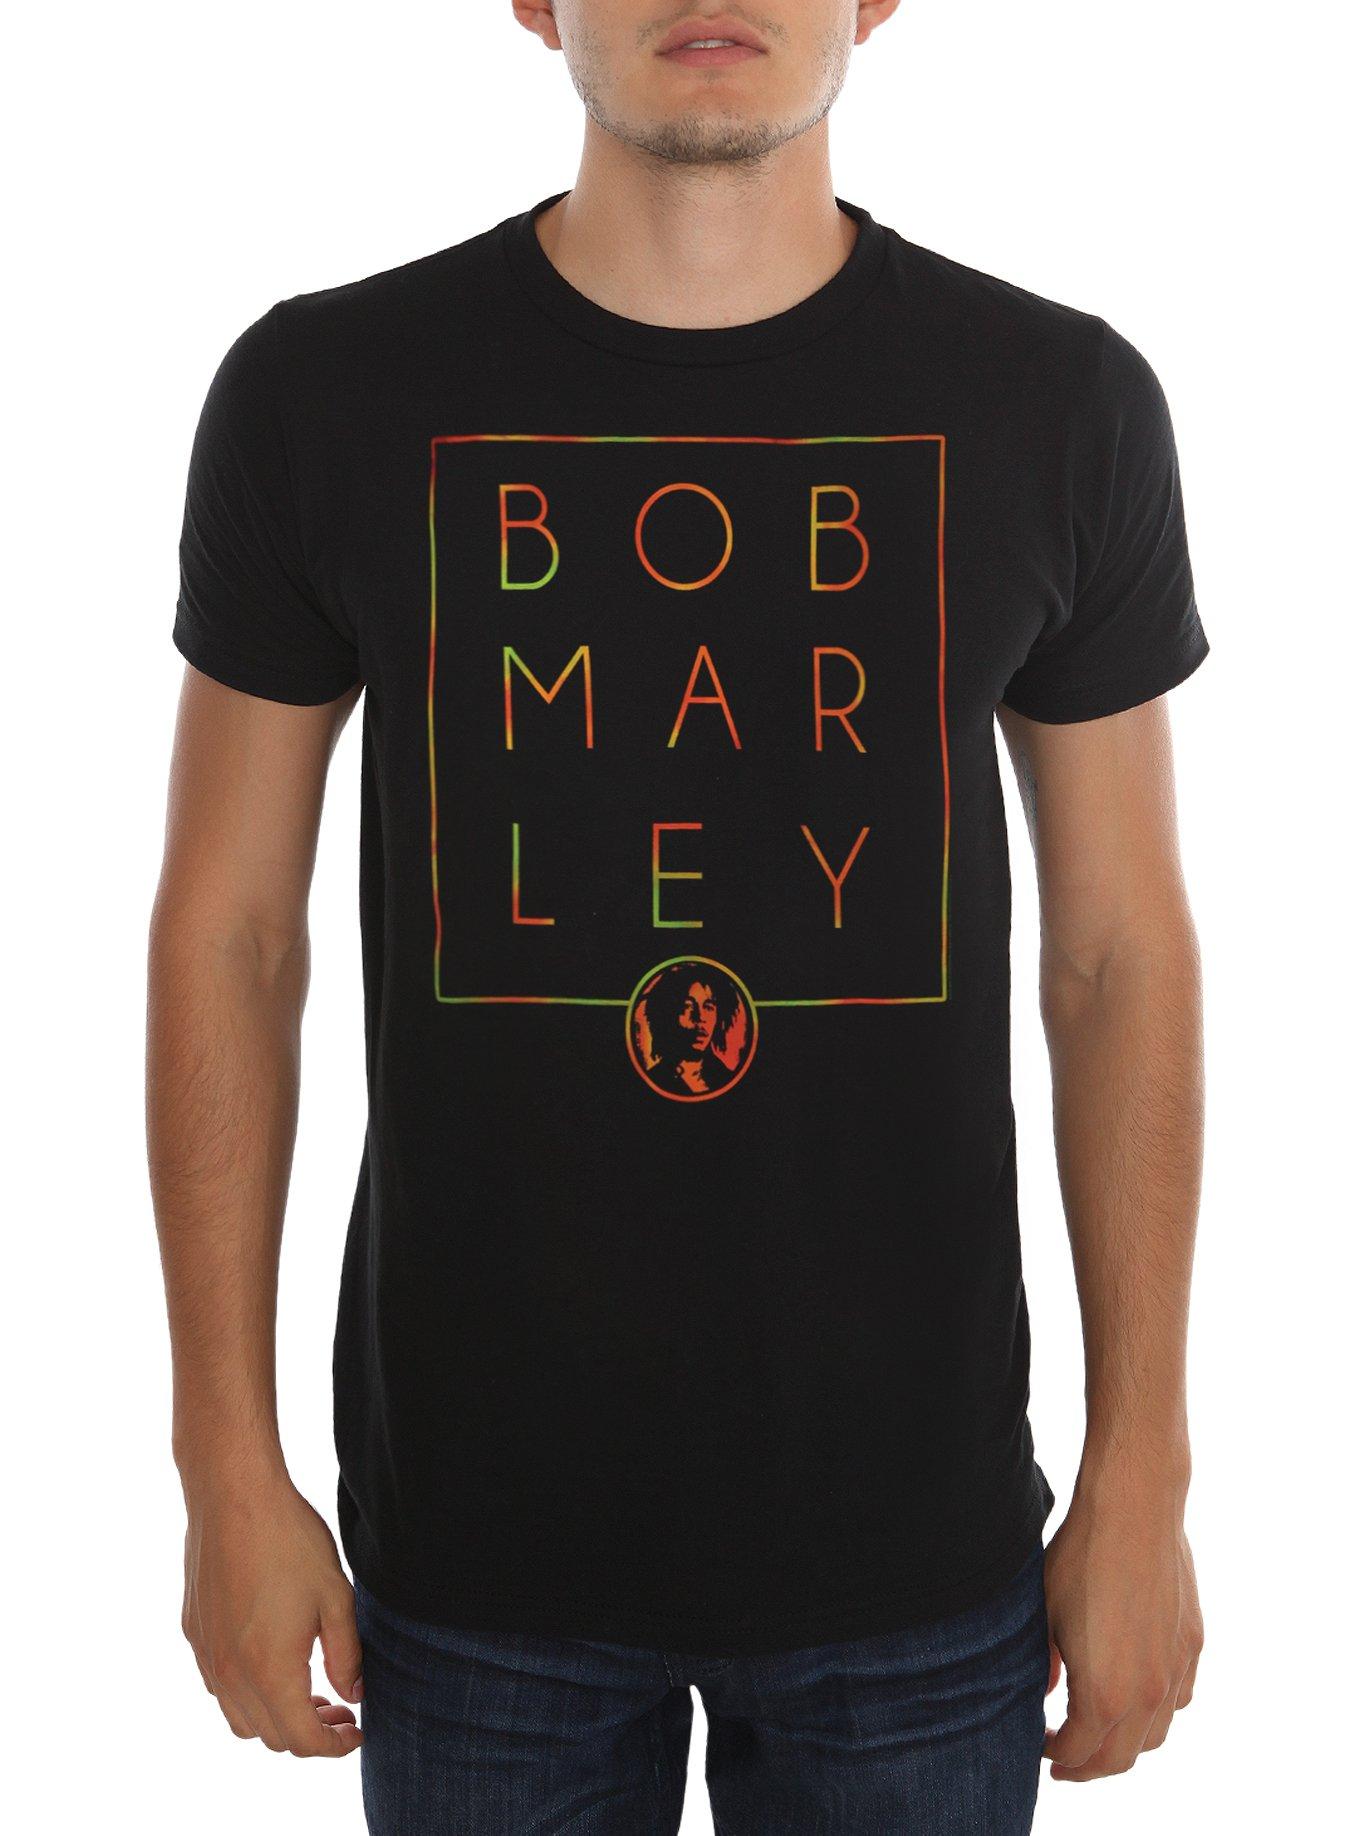 Bob Marley Rasta T-Shirt | Topic